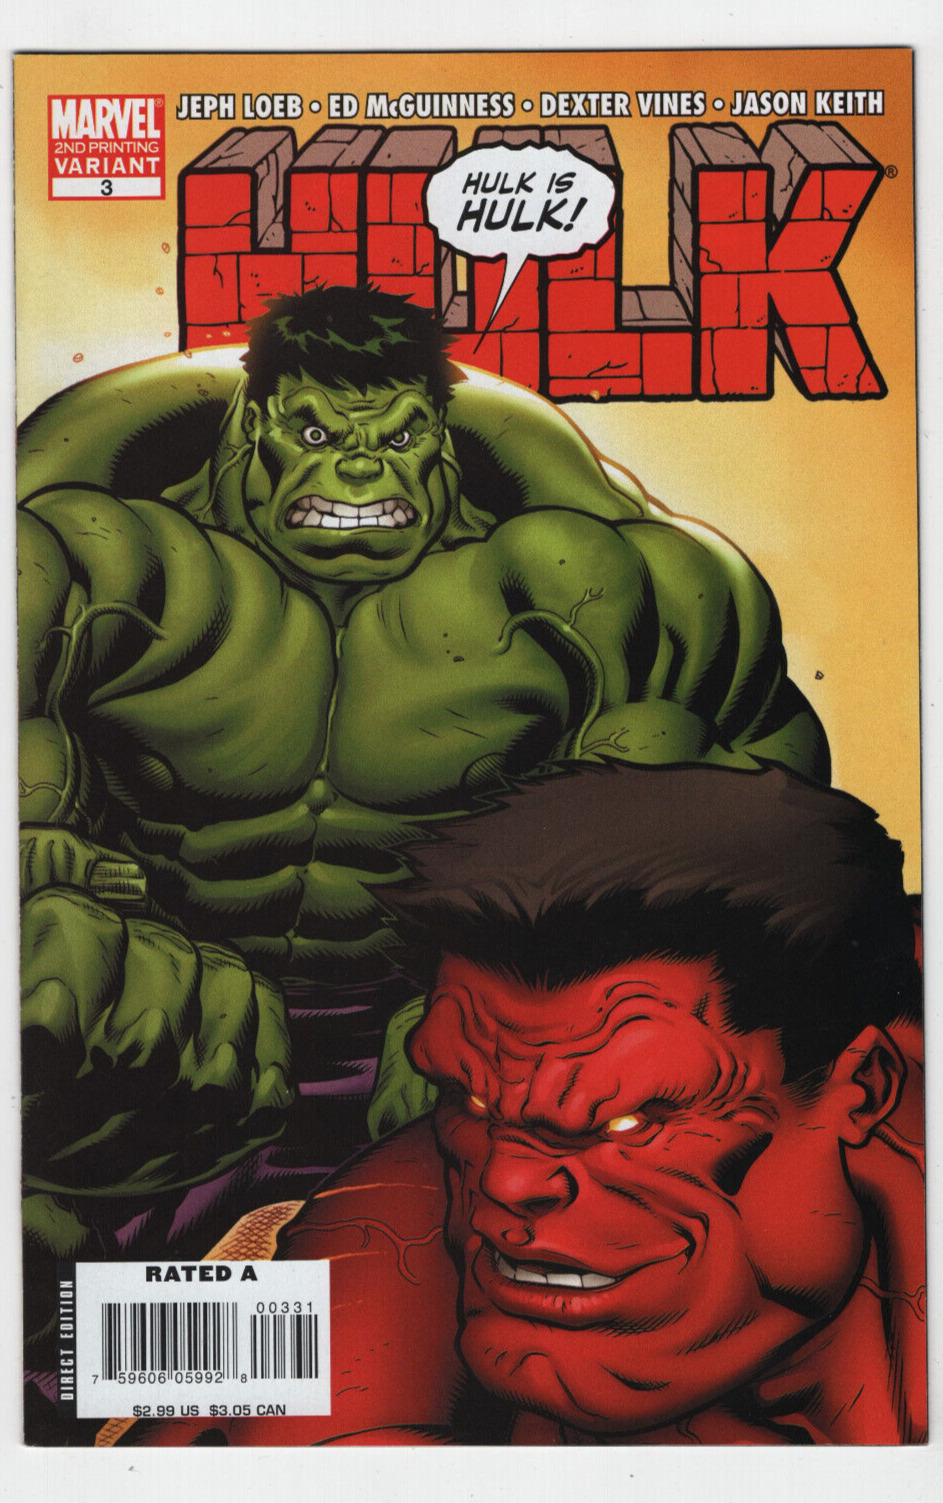 HULK #3 Green Hulk vs Red Hulk  2nd Print MCGUINNESS Variant MARVEL COMICS 2008